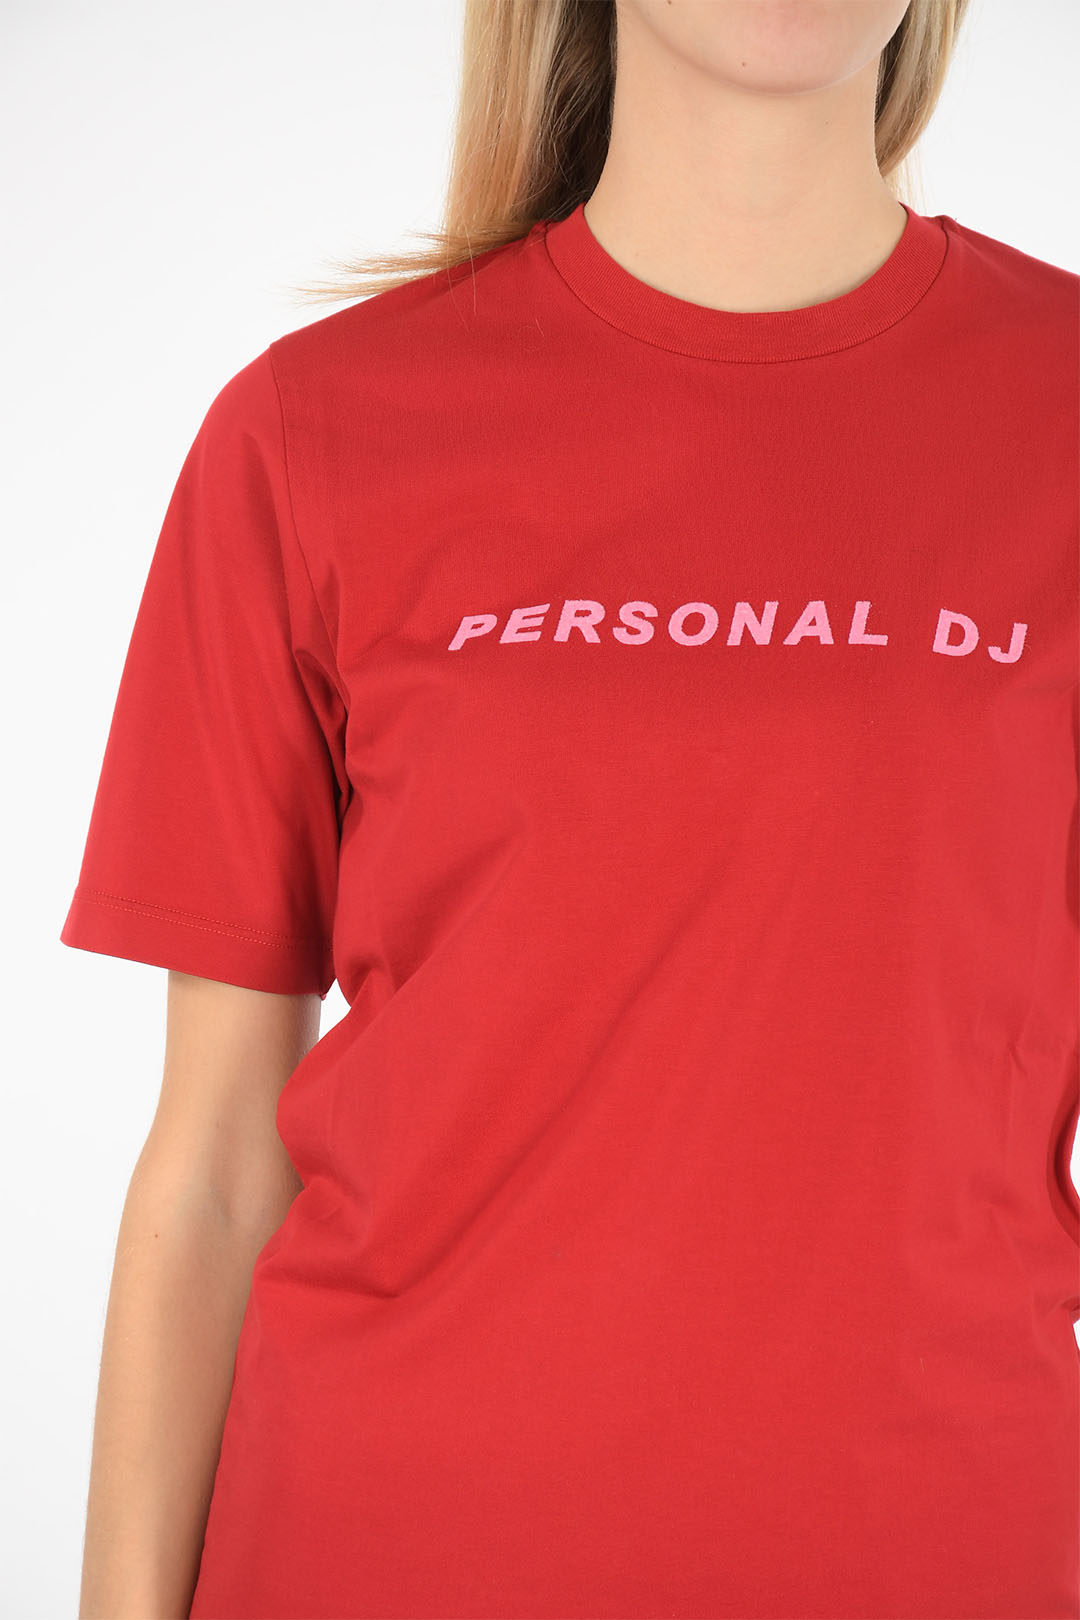 Peggy Gou Kirin Short Sleeve Flying DJ Shirt